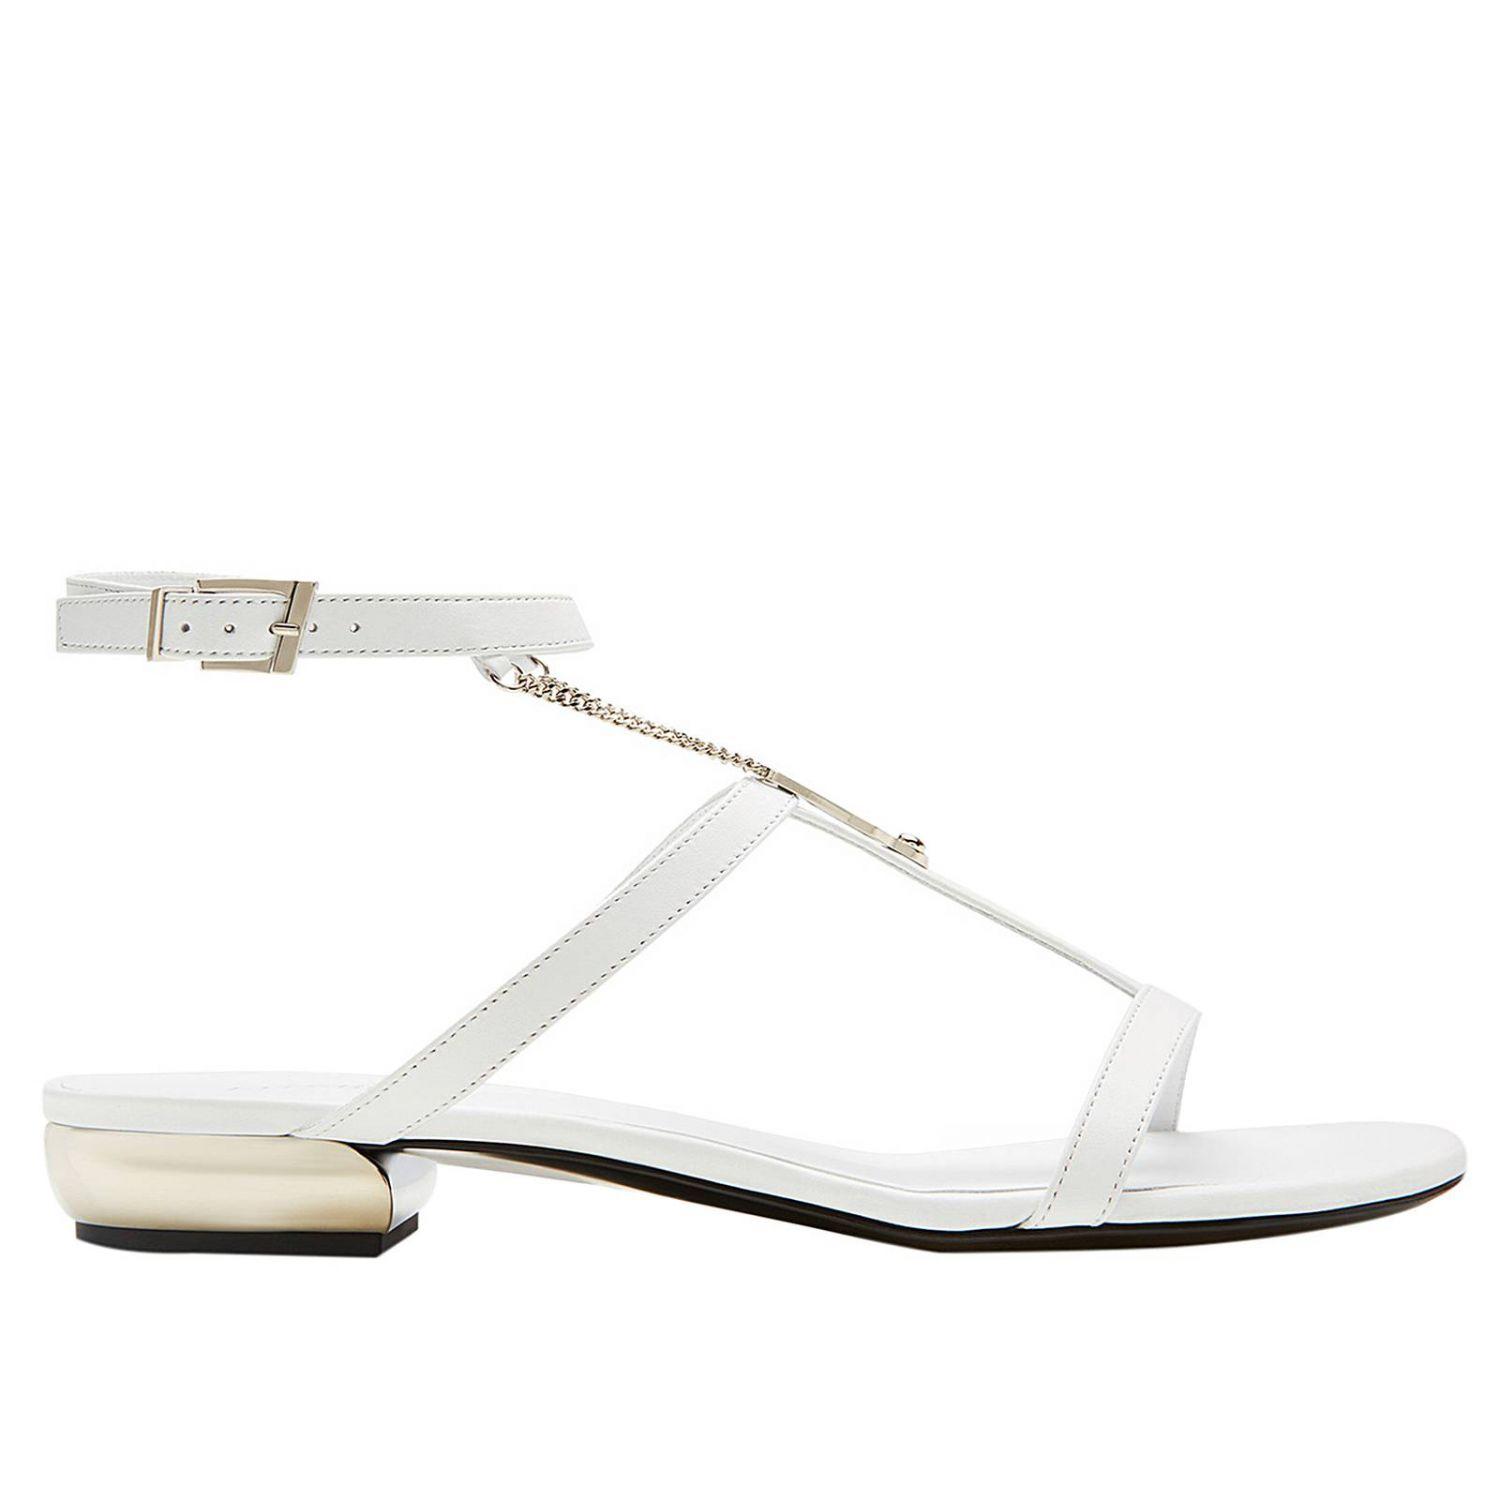 La Perla Leather Flat Sandals Shoes Women in White Lyst